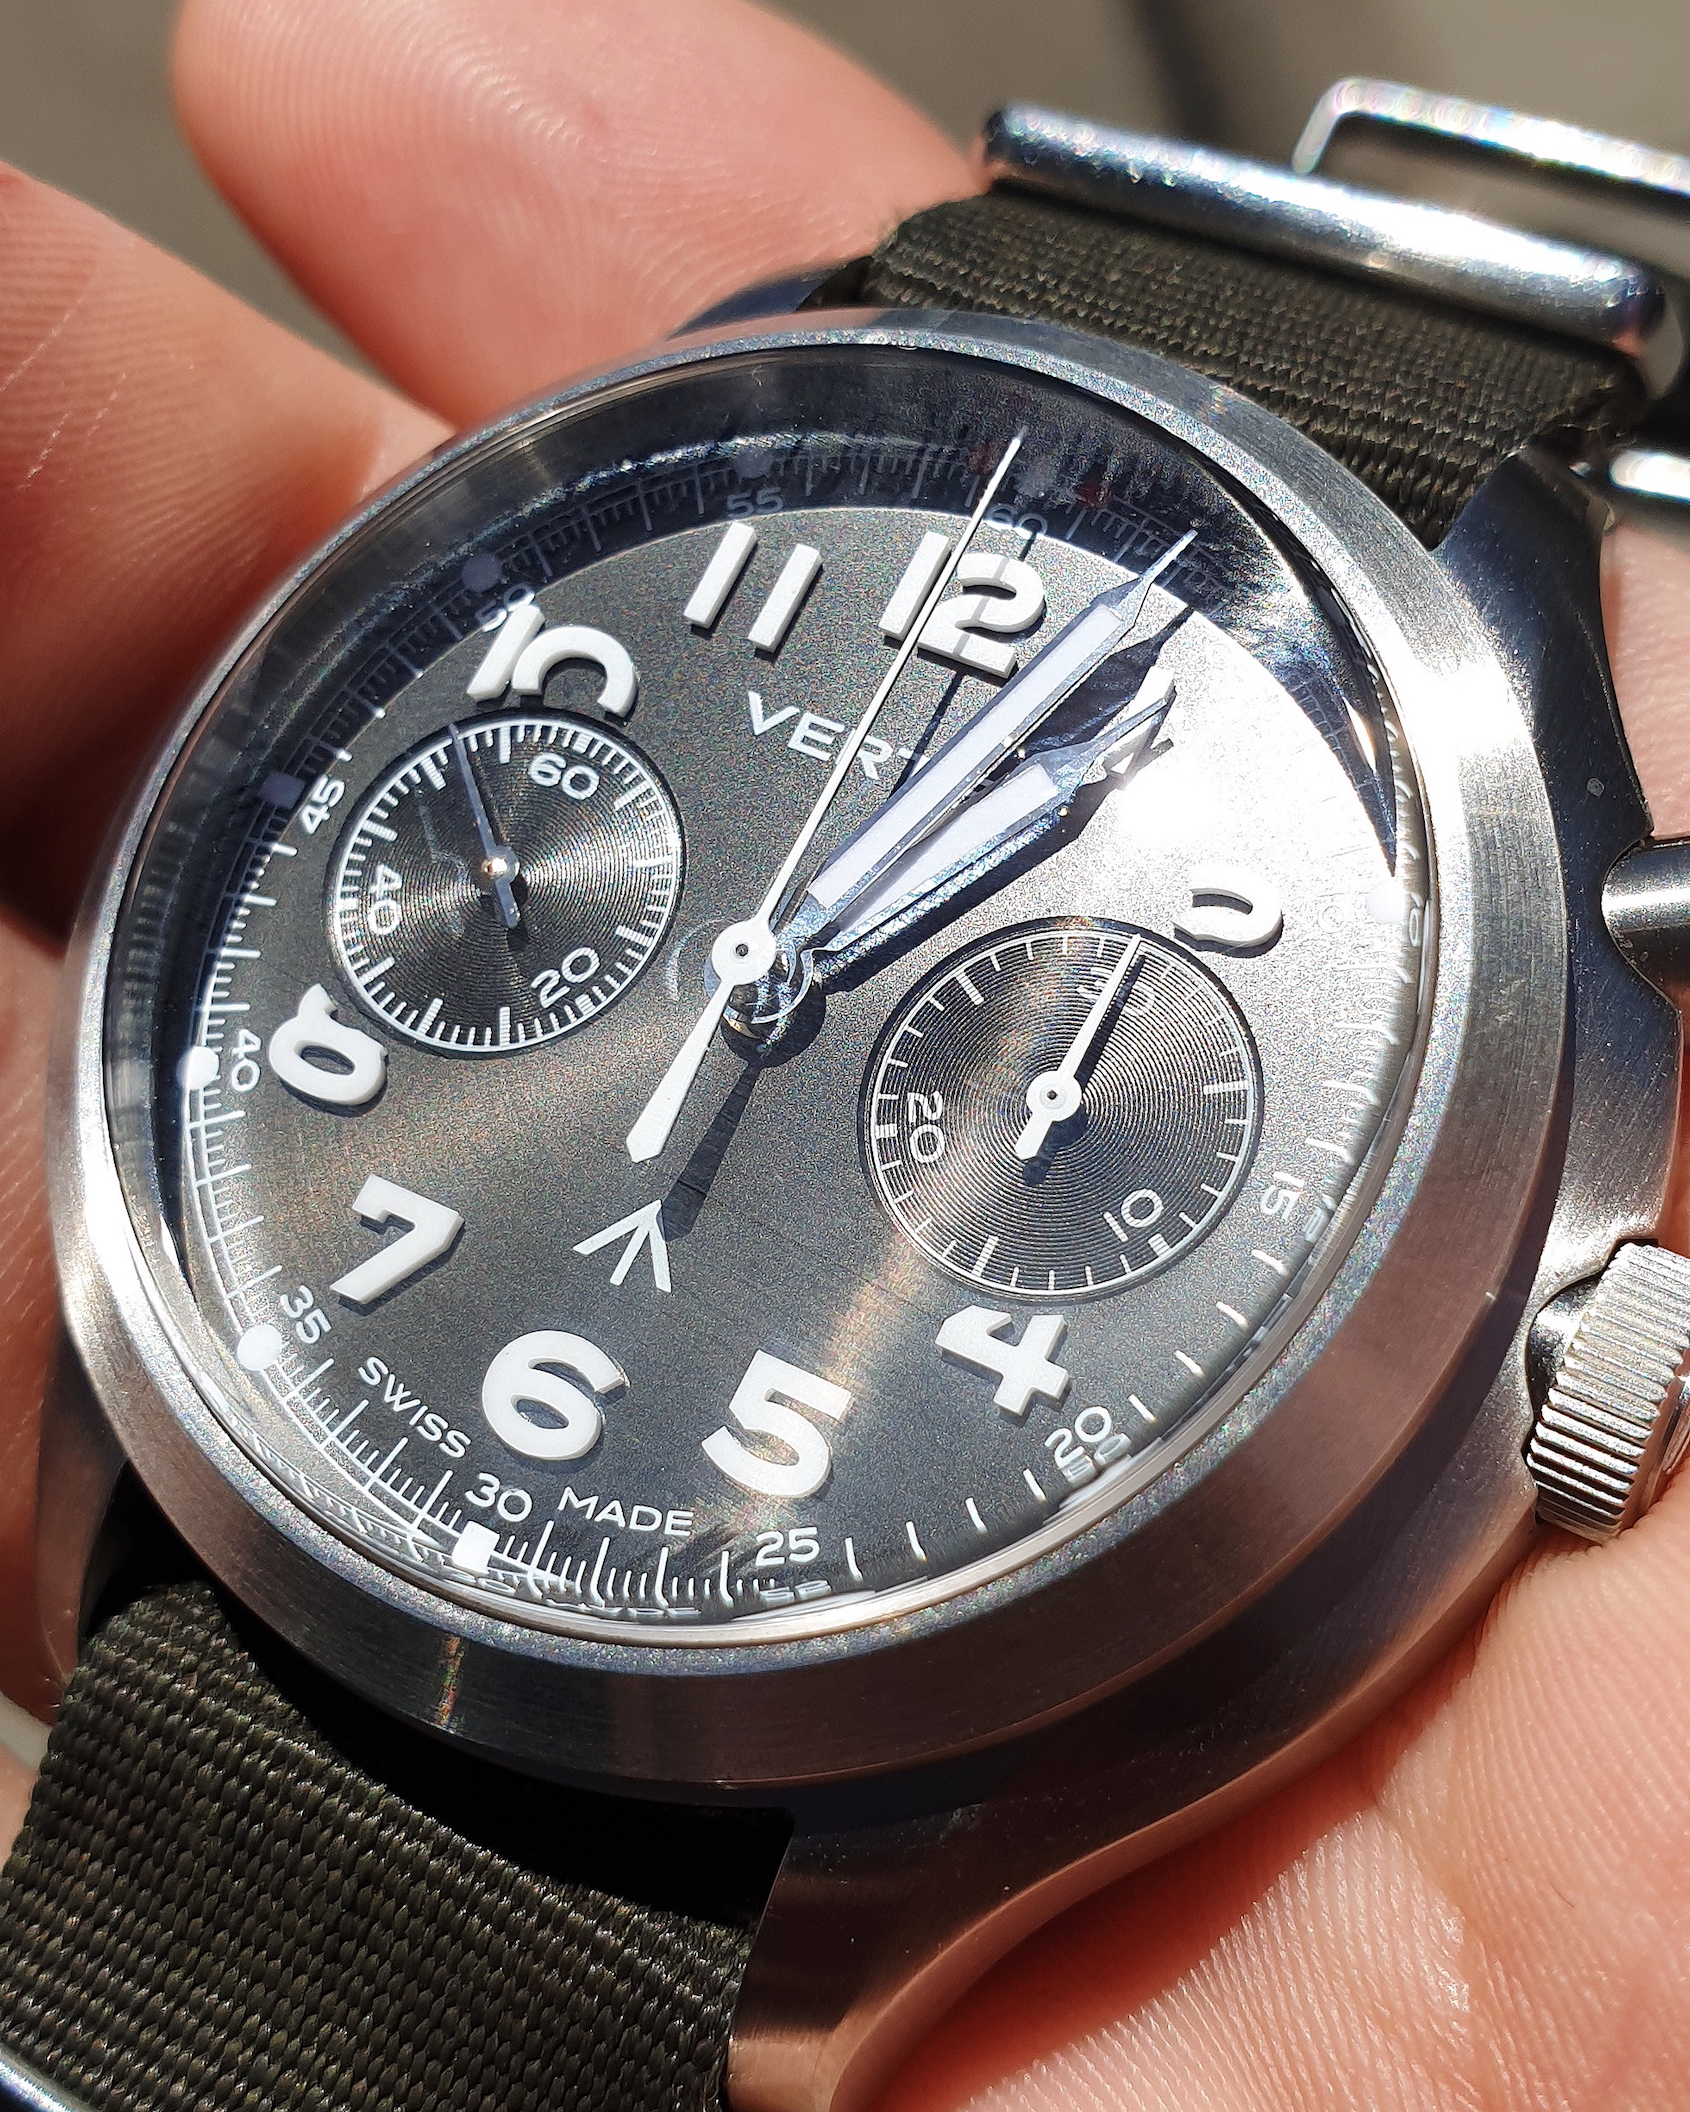 Vertex MP45 chronograph